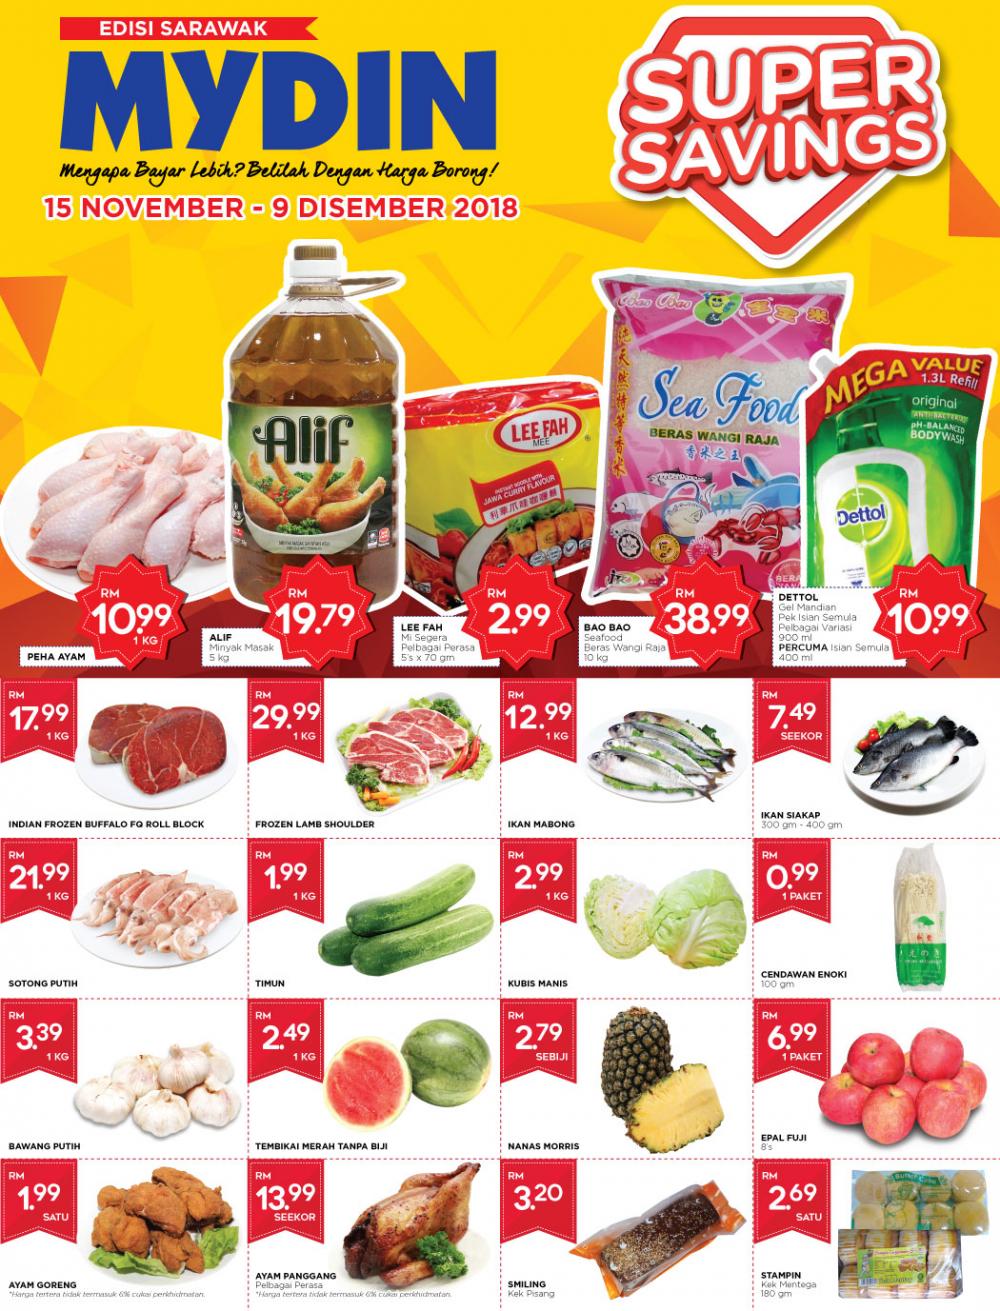 MYDIN Super Savings Promotion Catalogue at Sarawak (15 November 2018 - 9 December 2018)